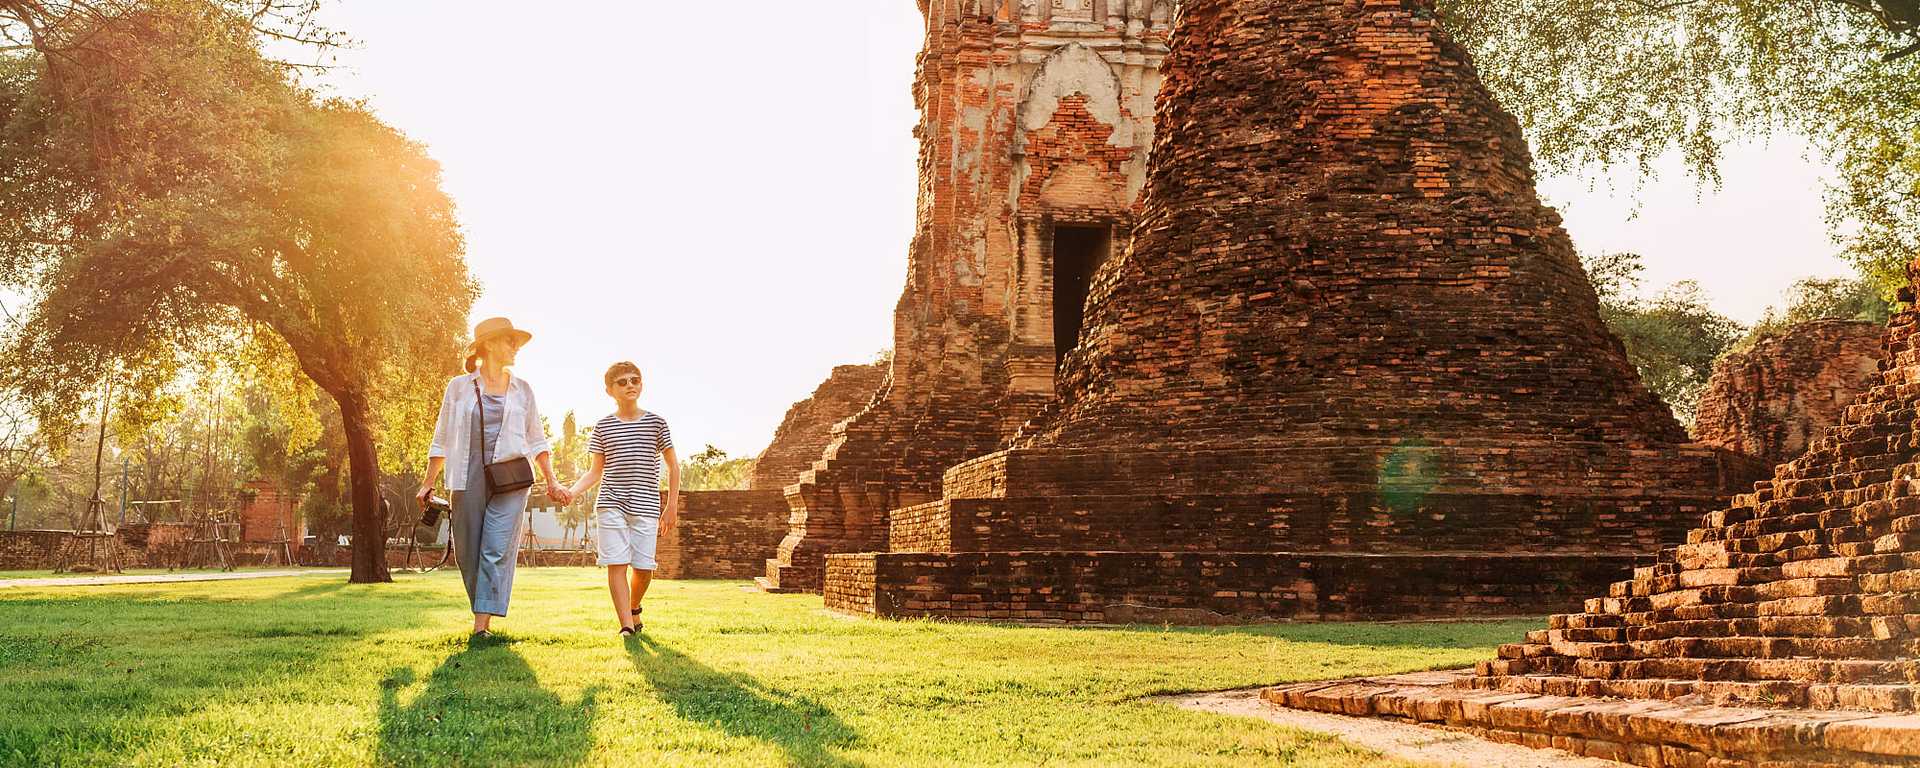 Mother and son tourists walking hand in hand in Wat Chaiwatthanaram ruines in Ayutthaya, Thailand 